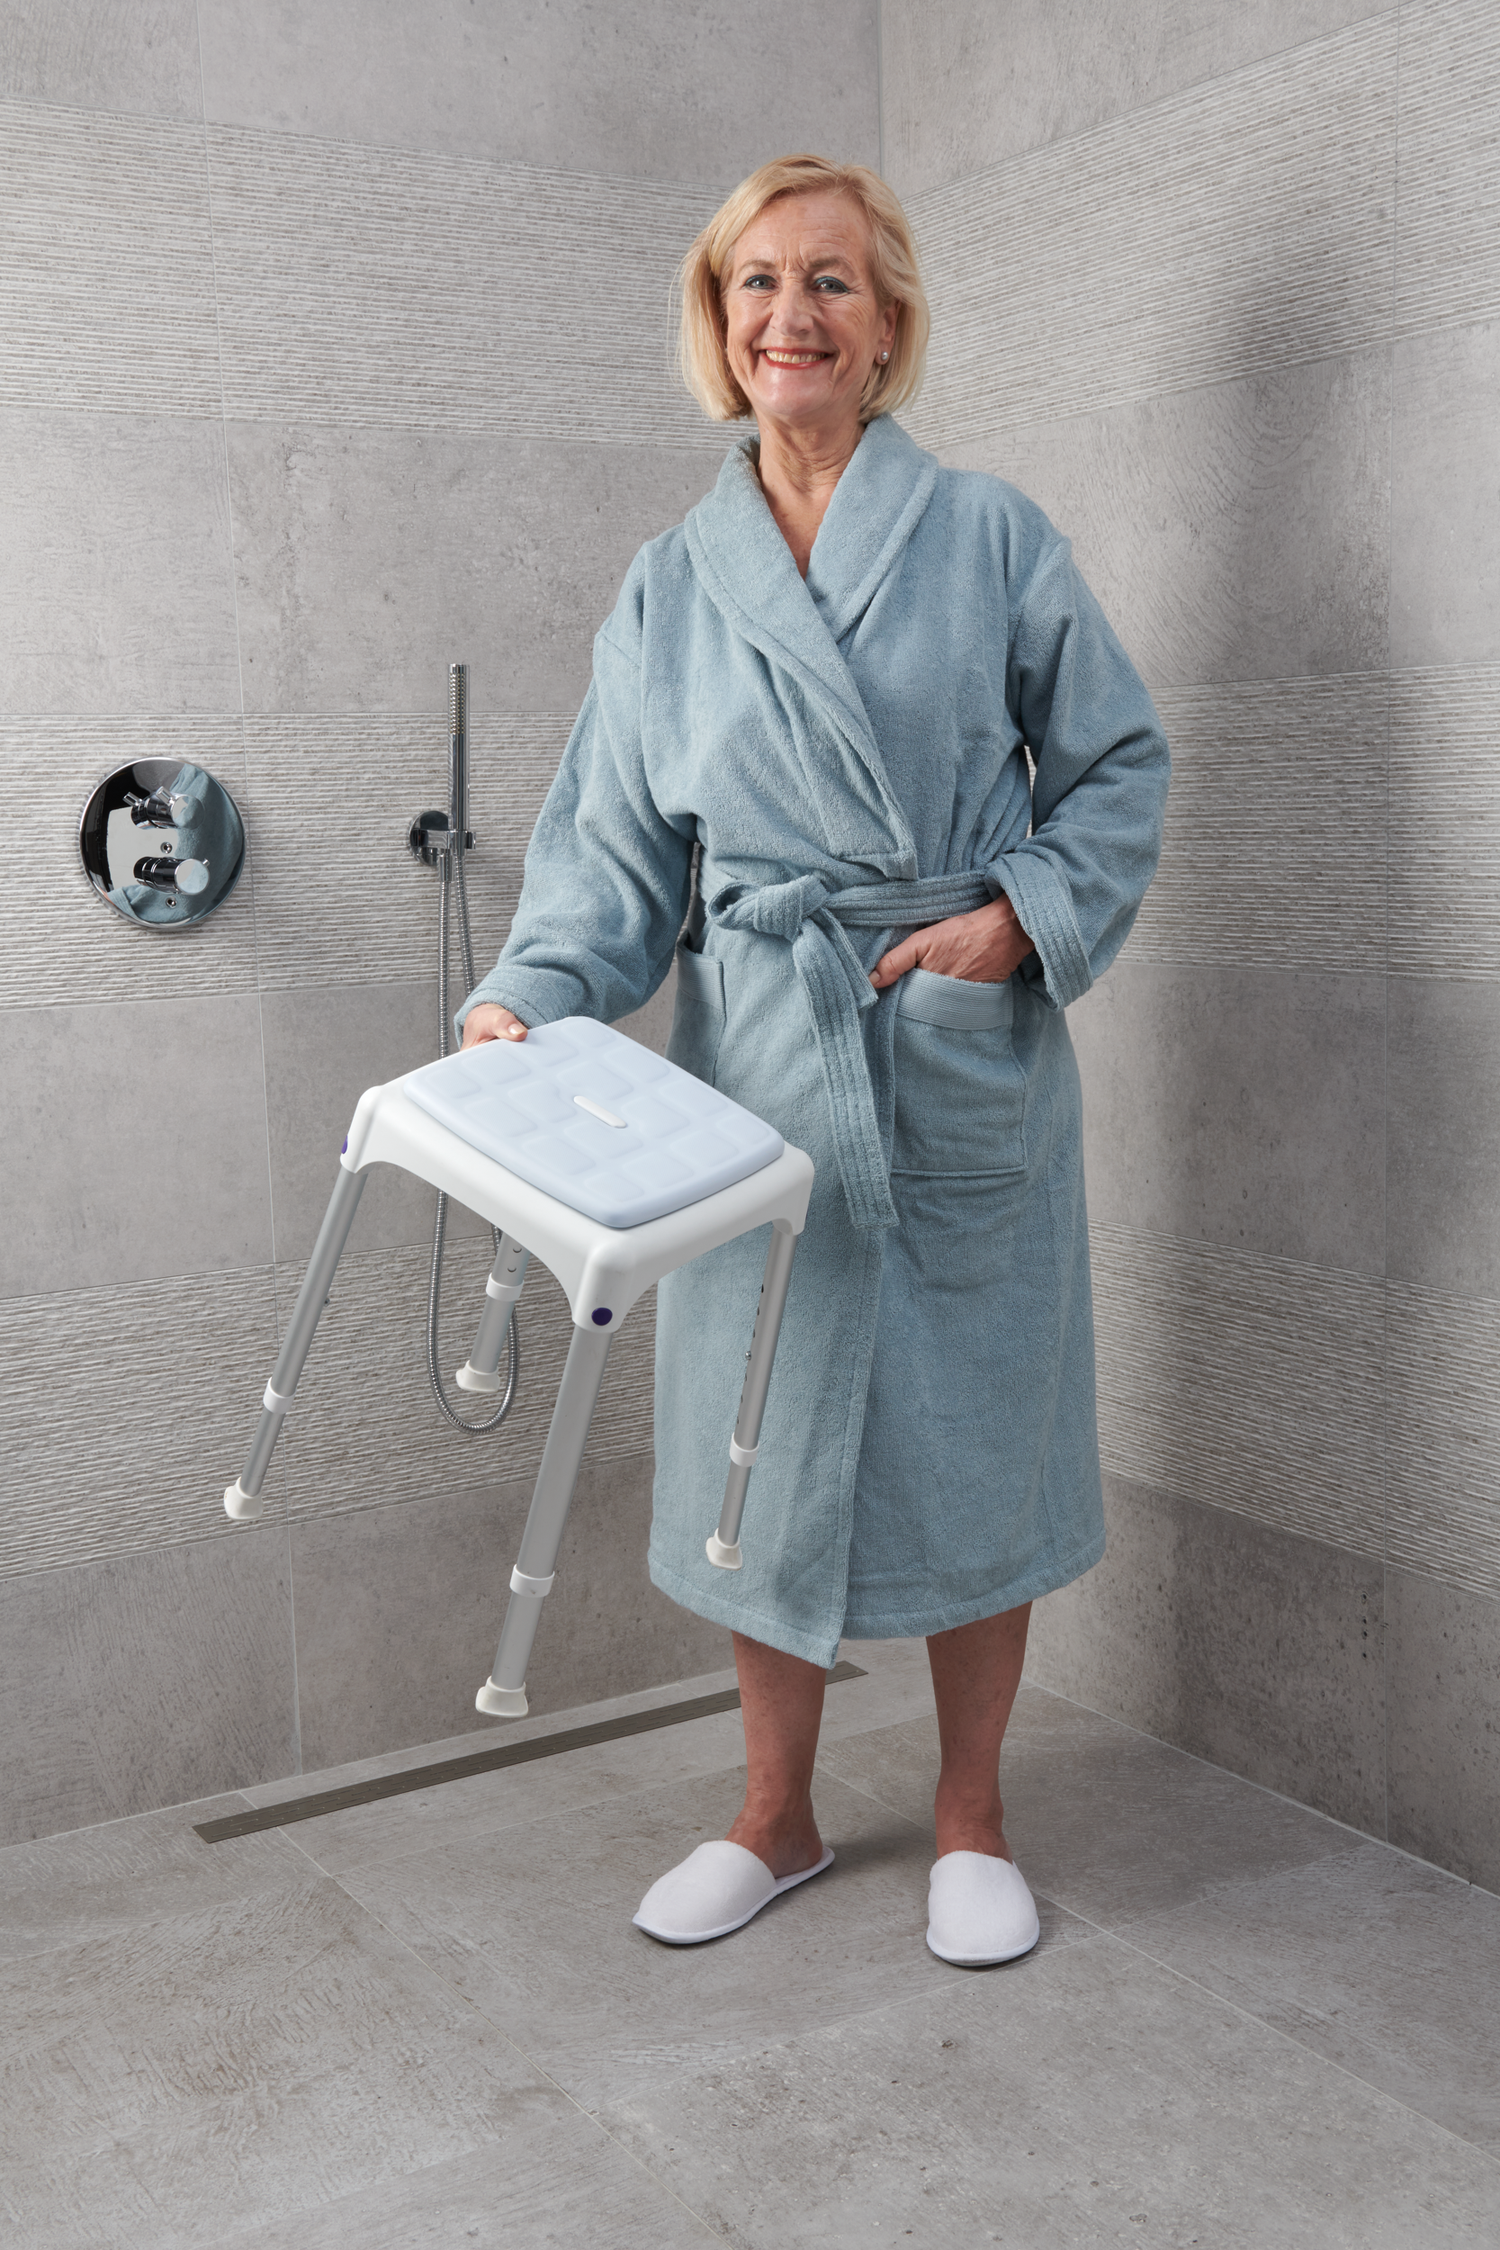 SecuCare comfort cushion for Quattro shower stool